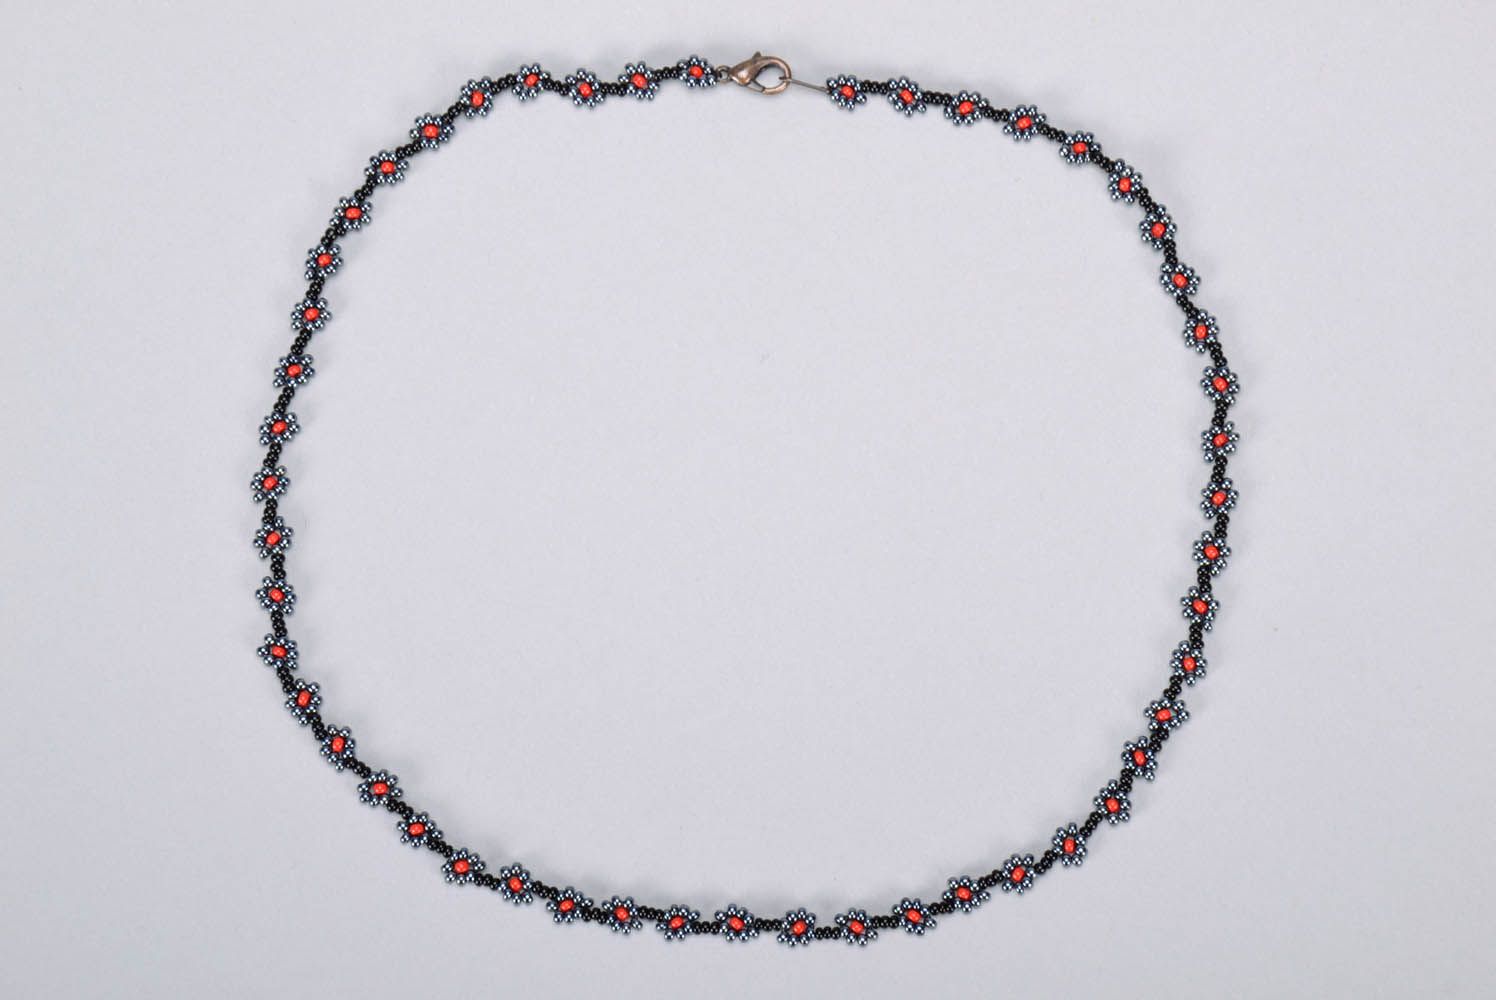 Homemade beaded necklace-bracelet photo 2